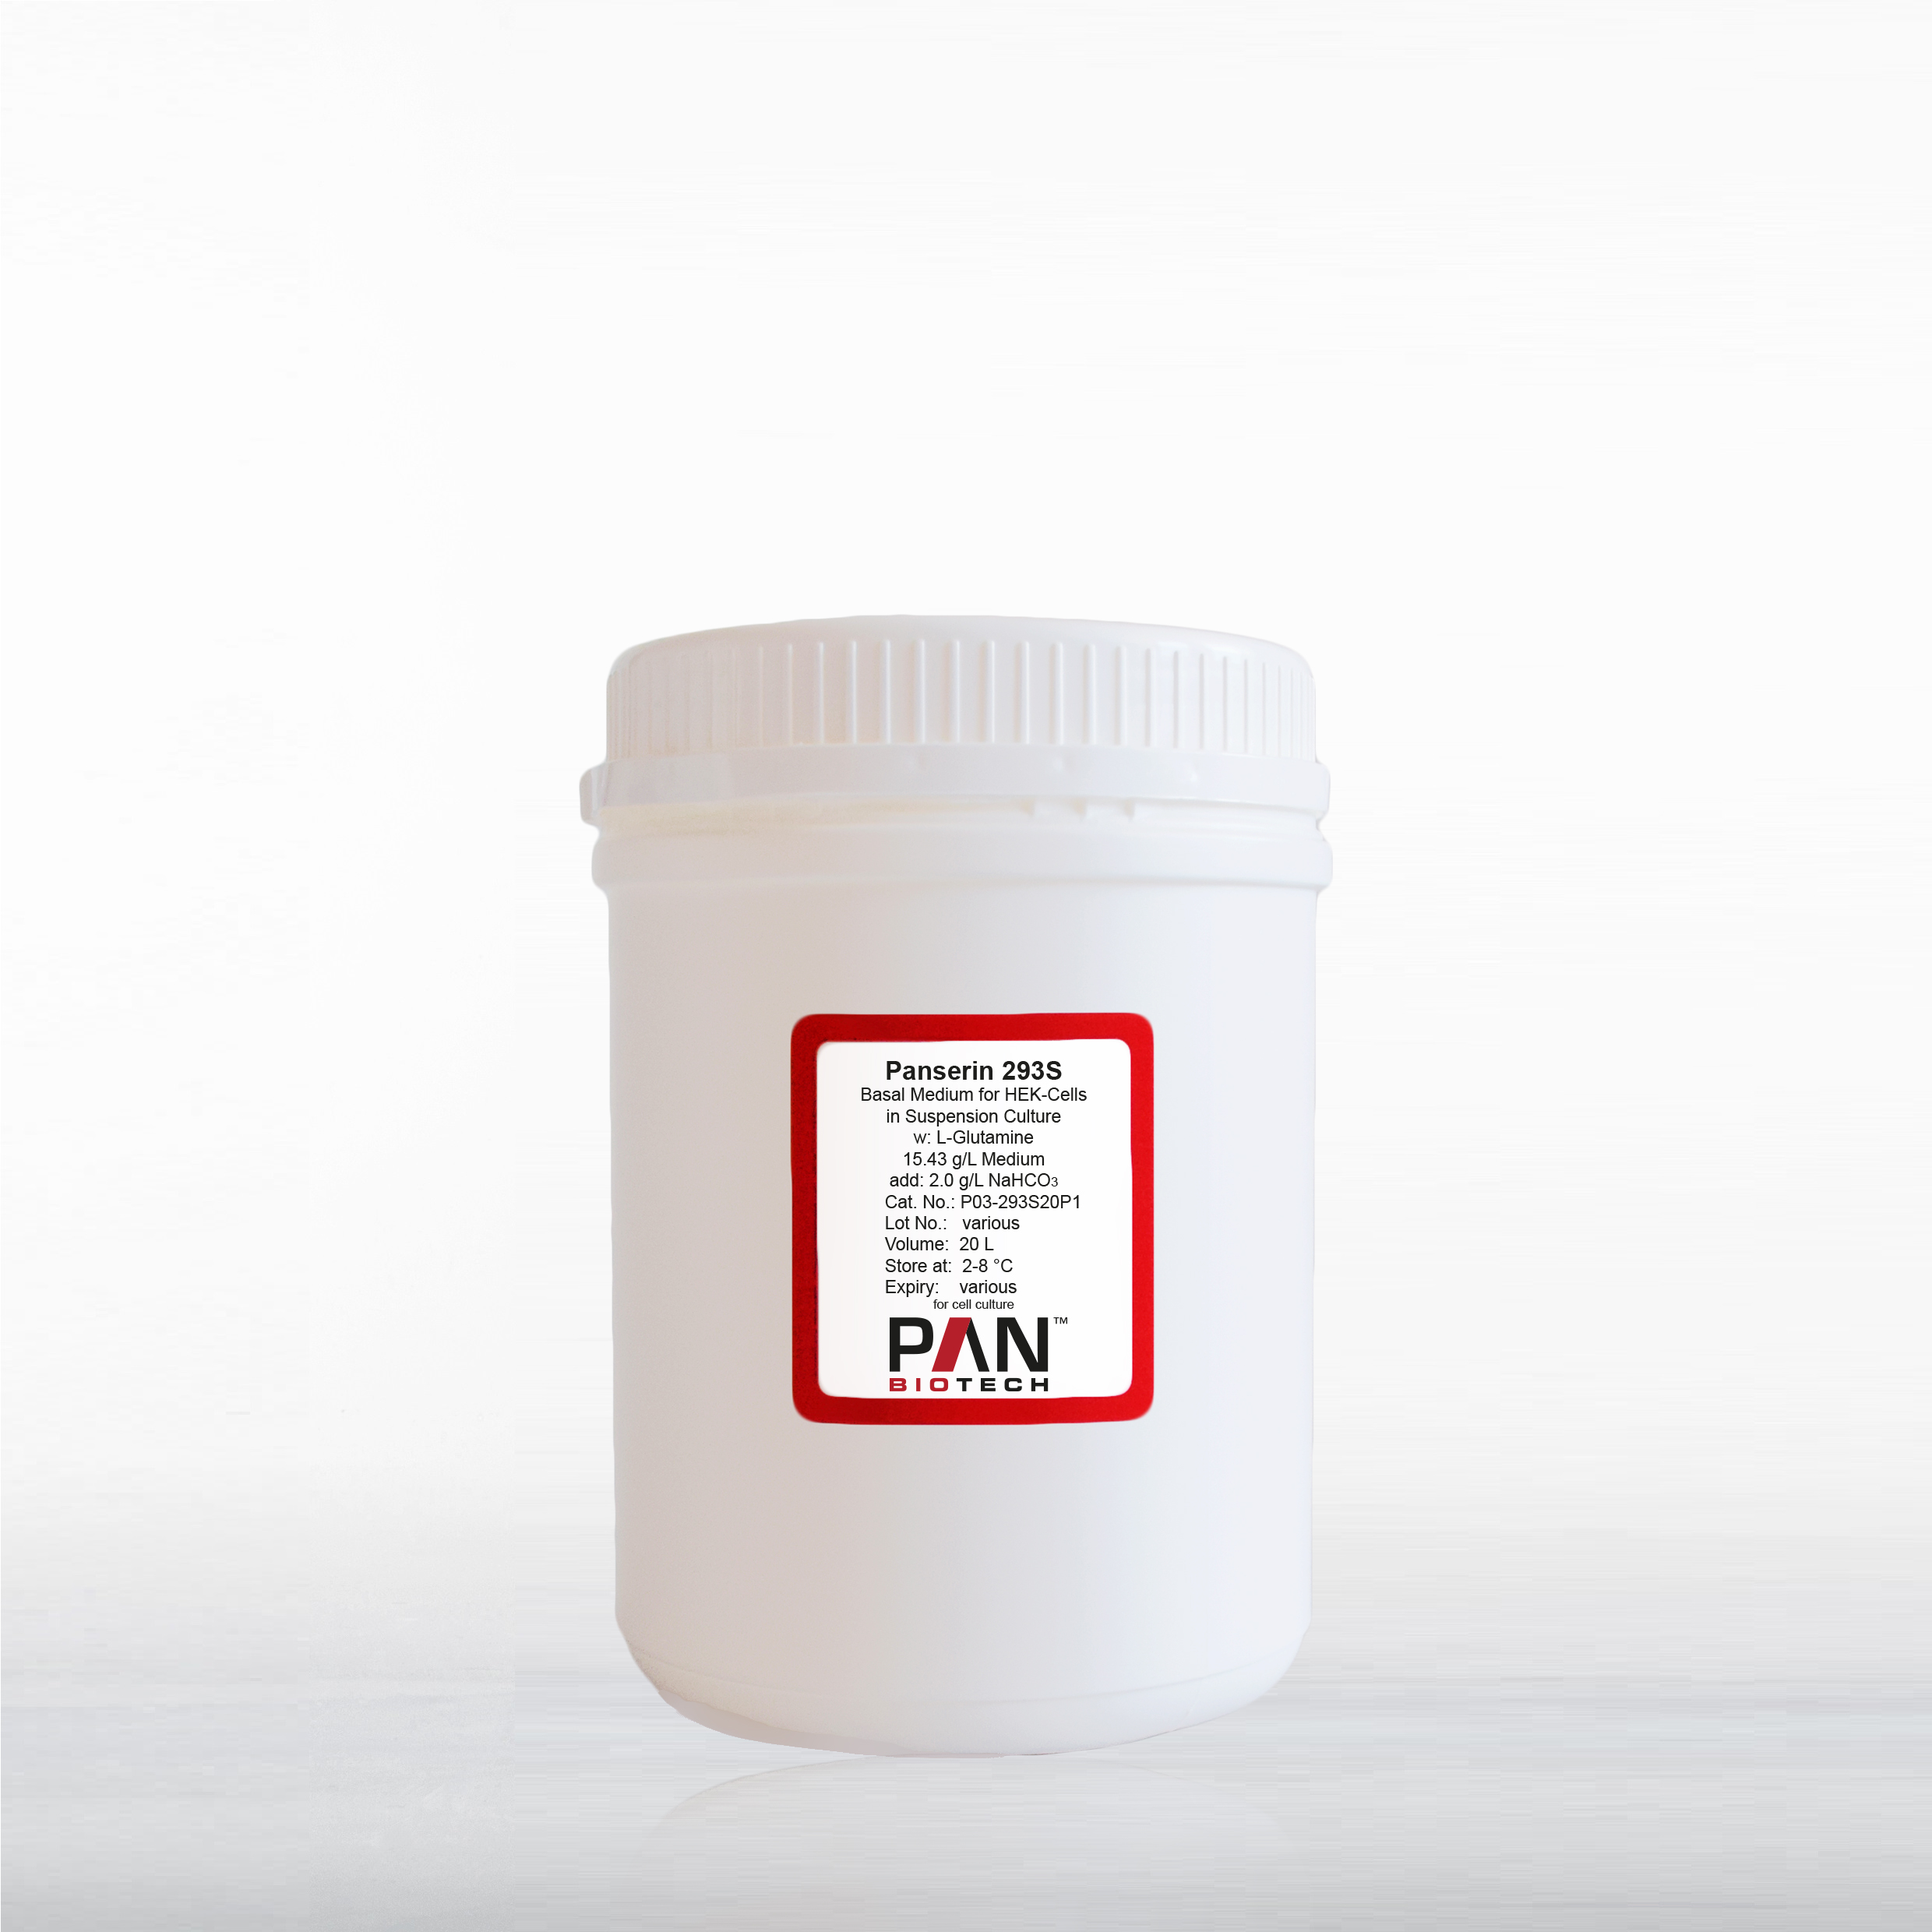 Panserin 293S, Serum-free medium for HEK-Cells in suspension culture, 20 L Powder